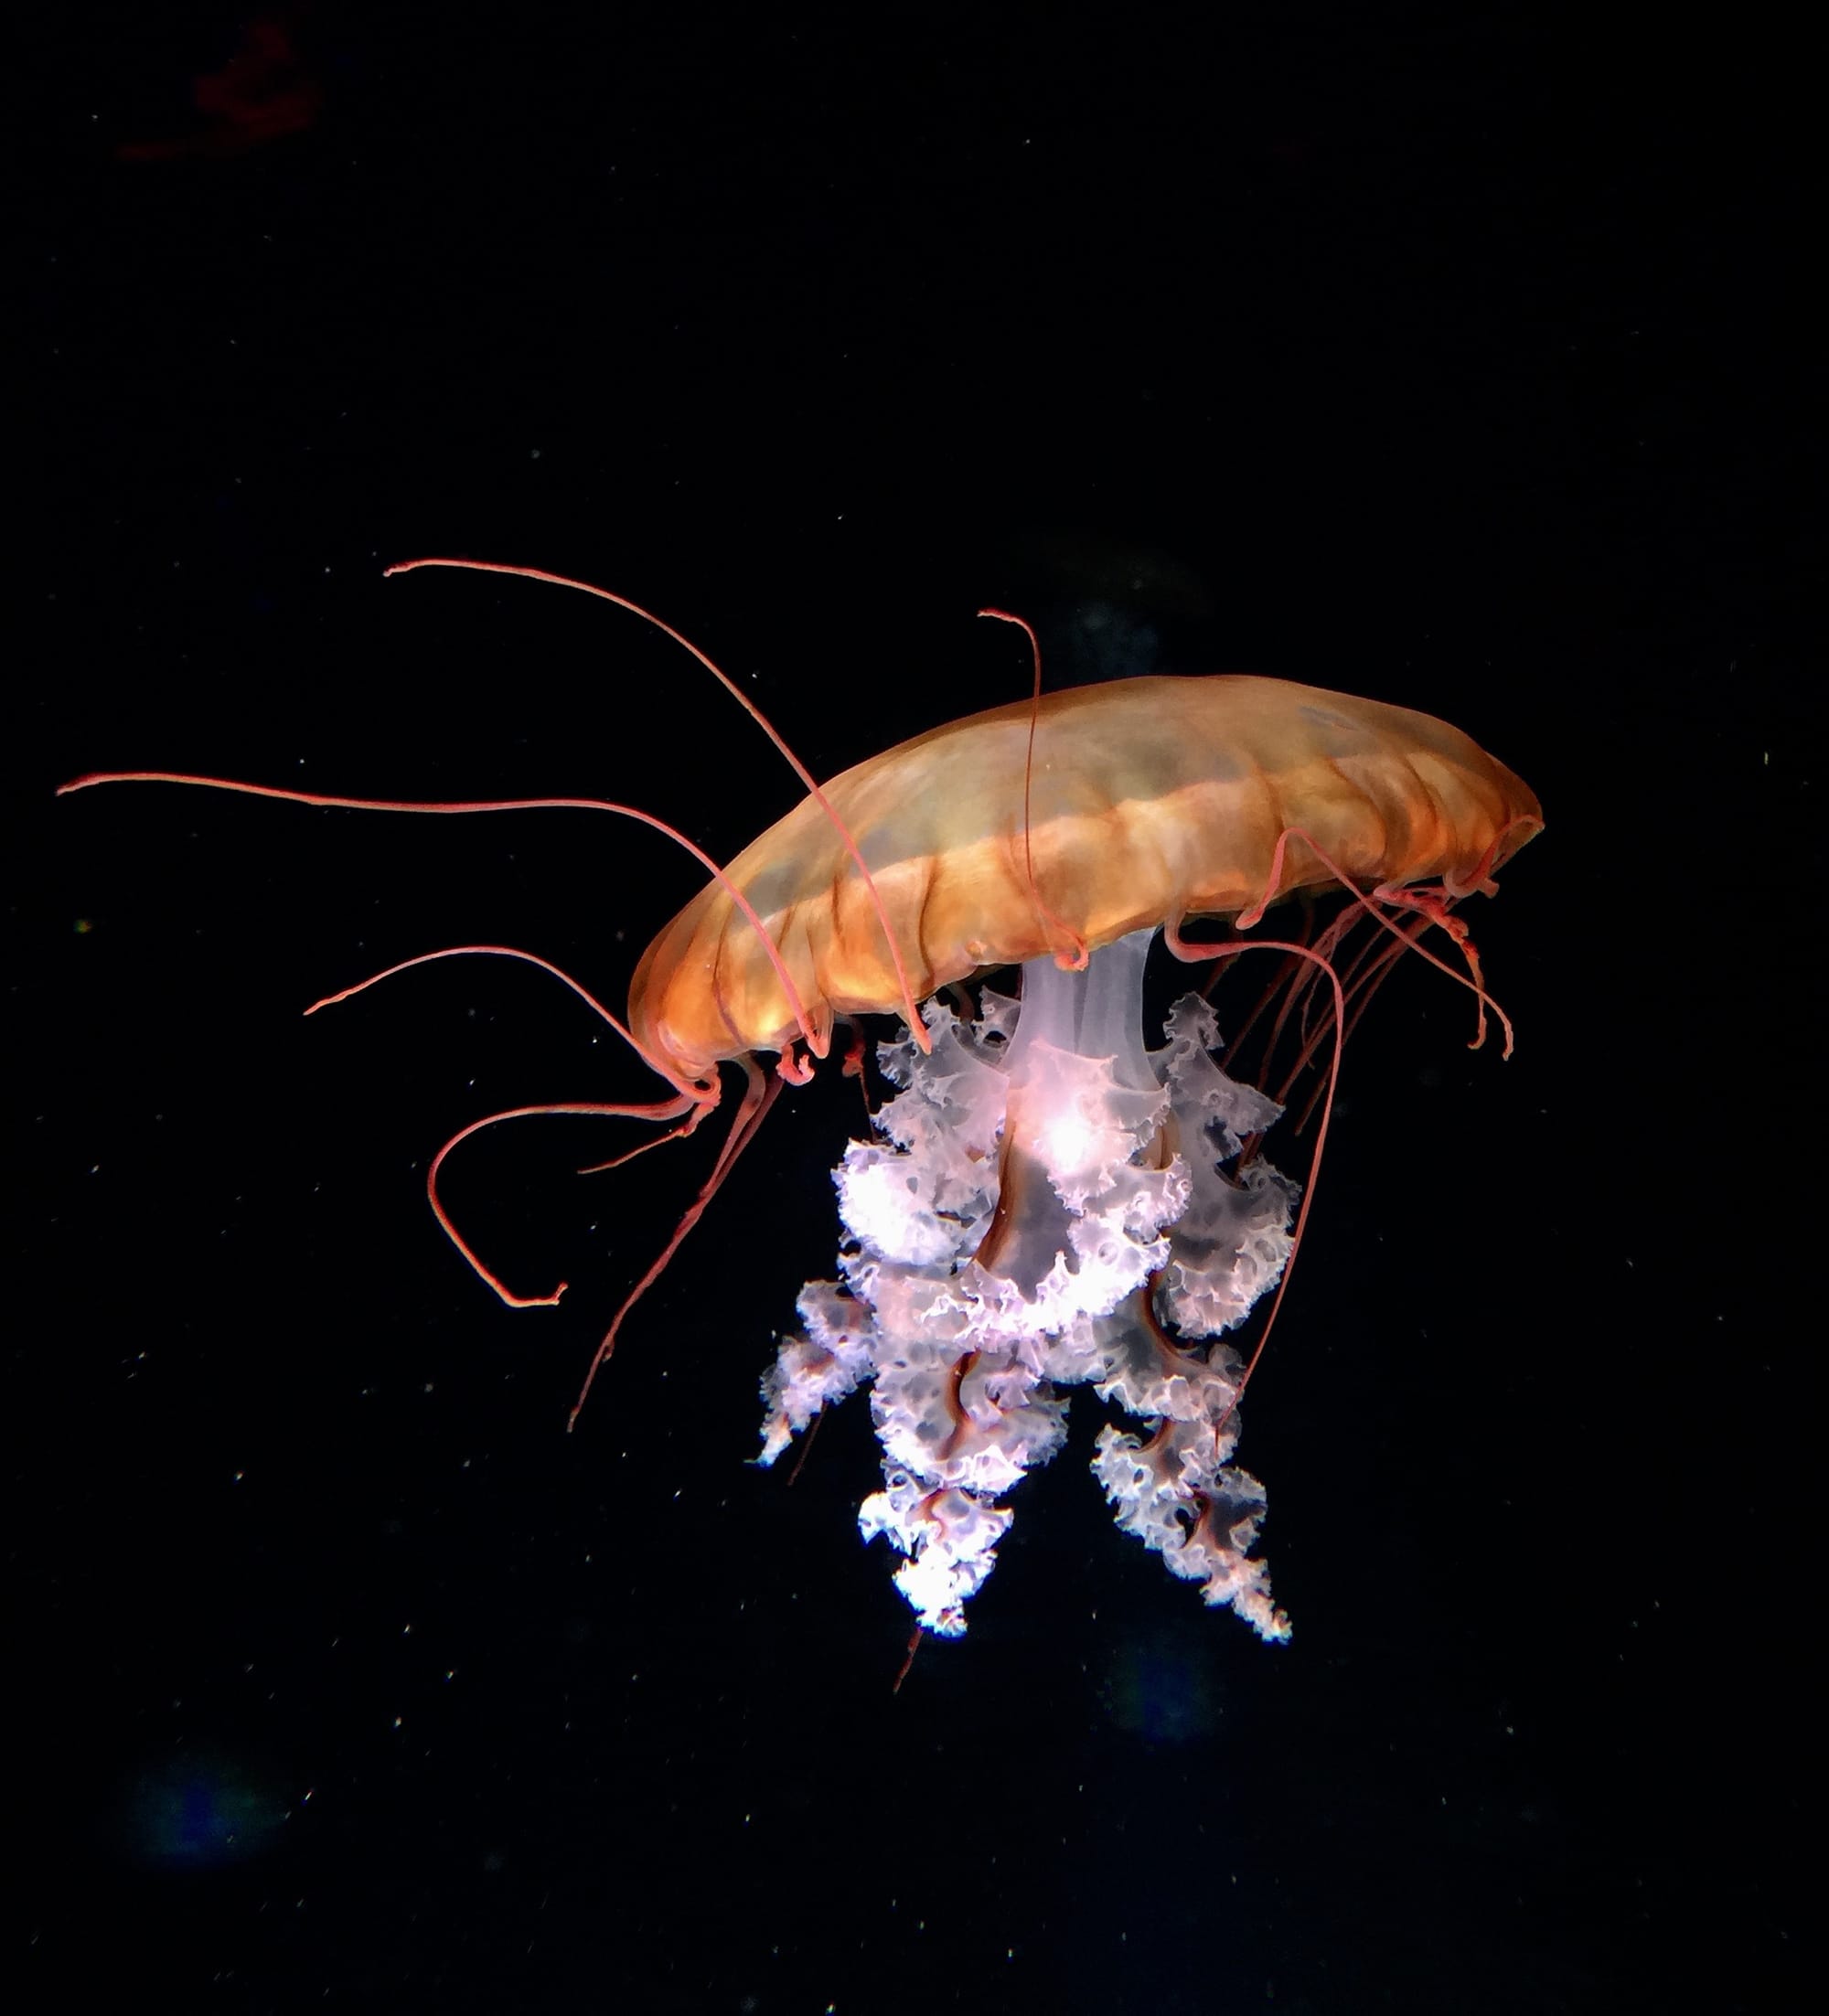 Jellyfish. Photo by Steele Grasza, Unsplash.